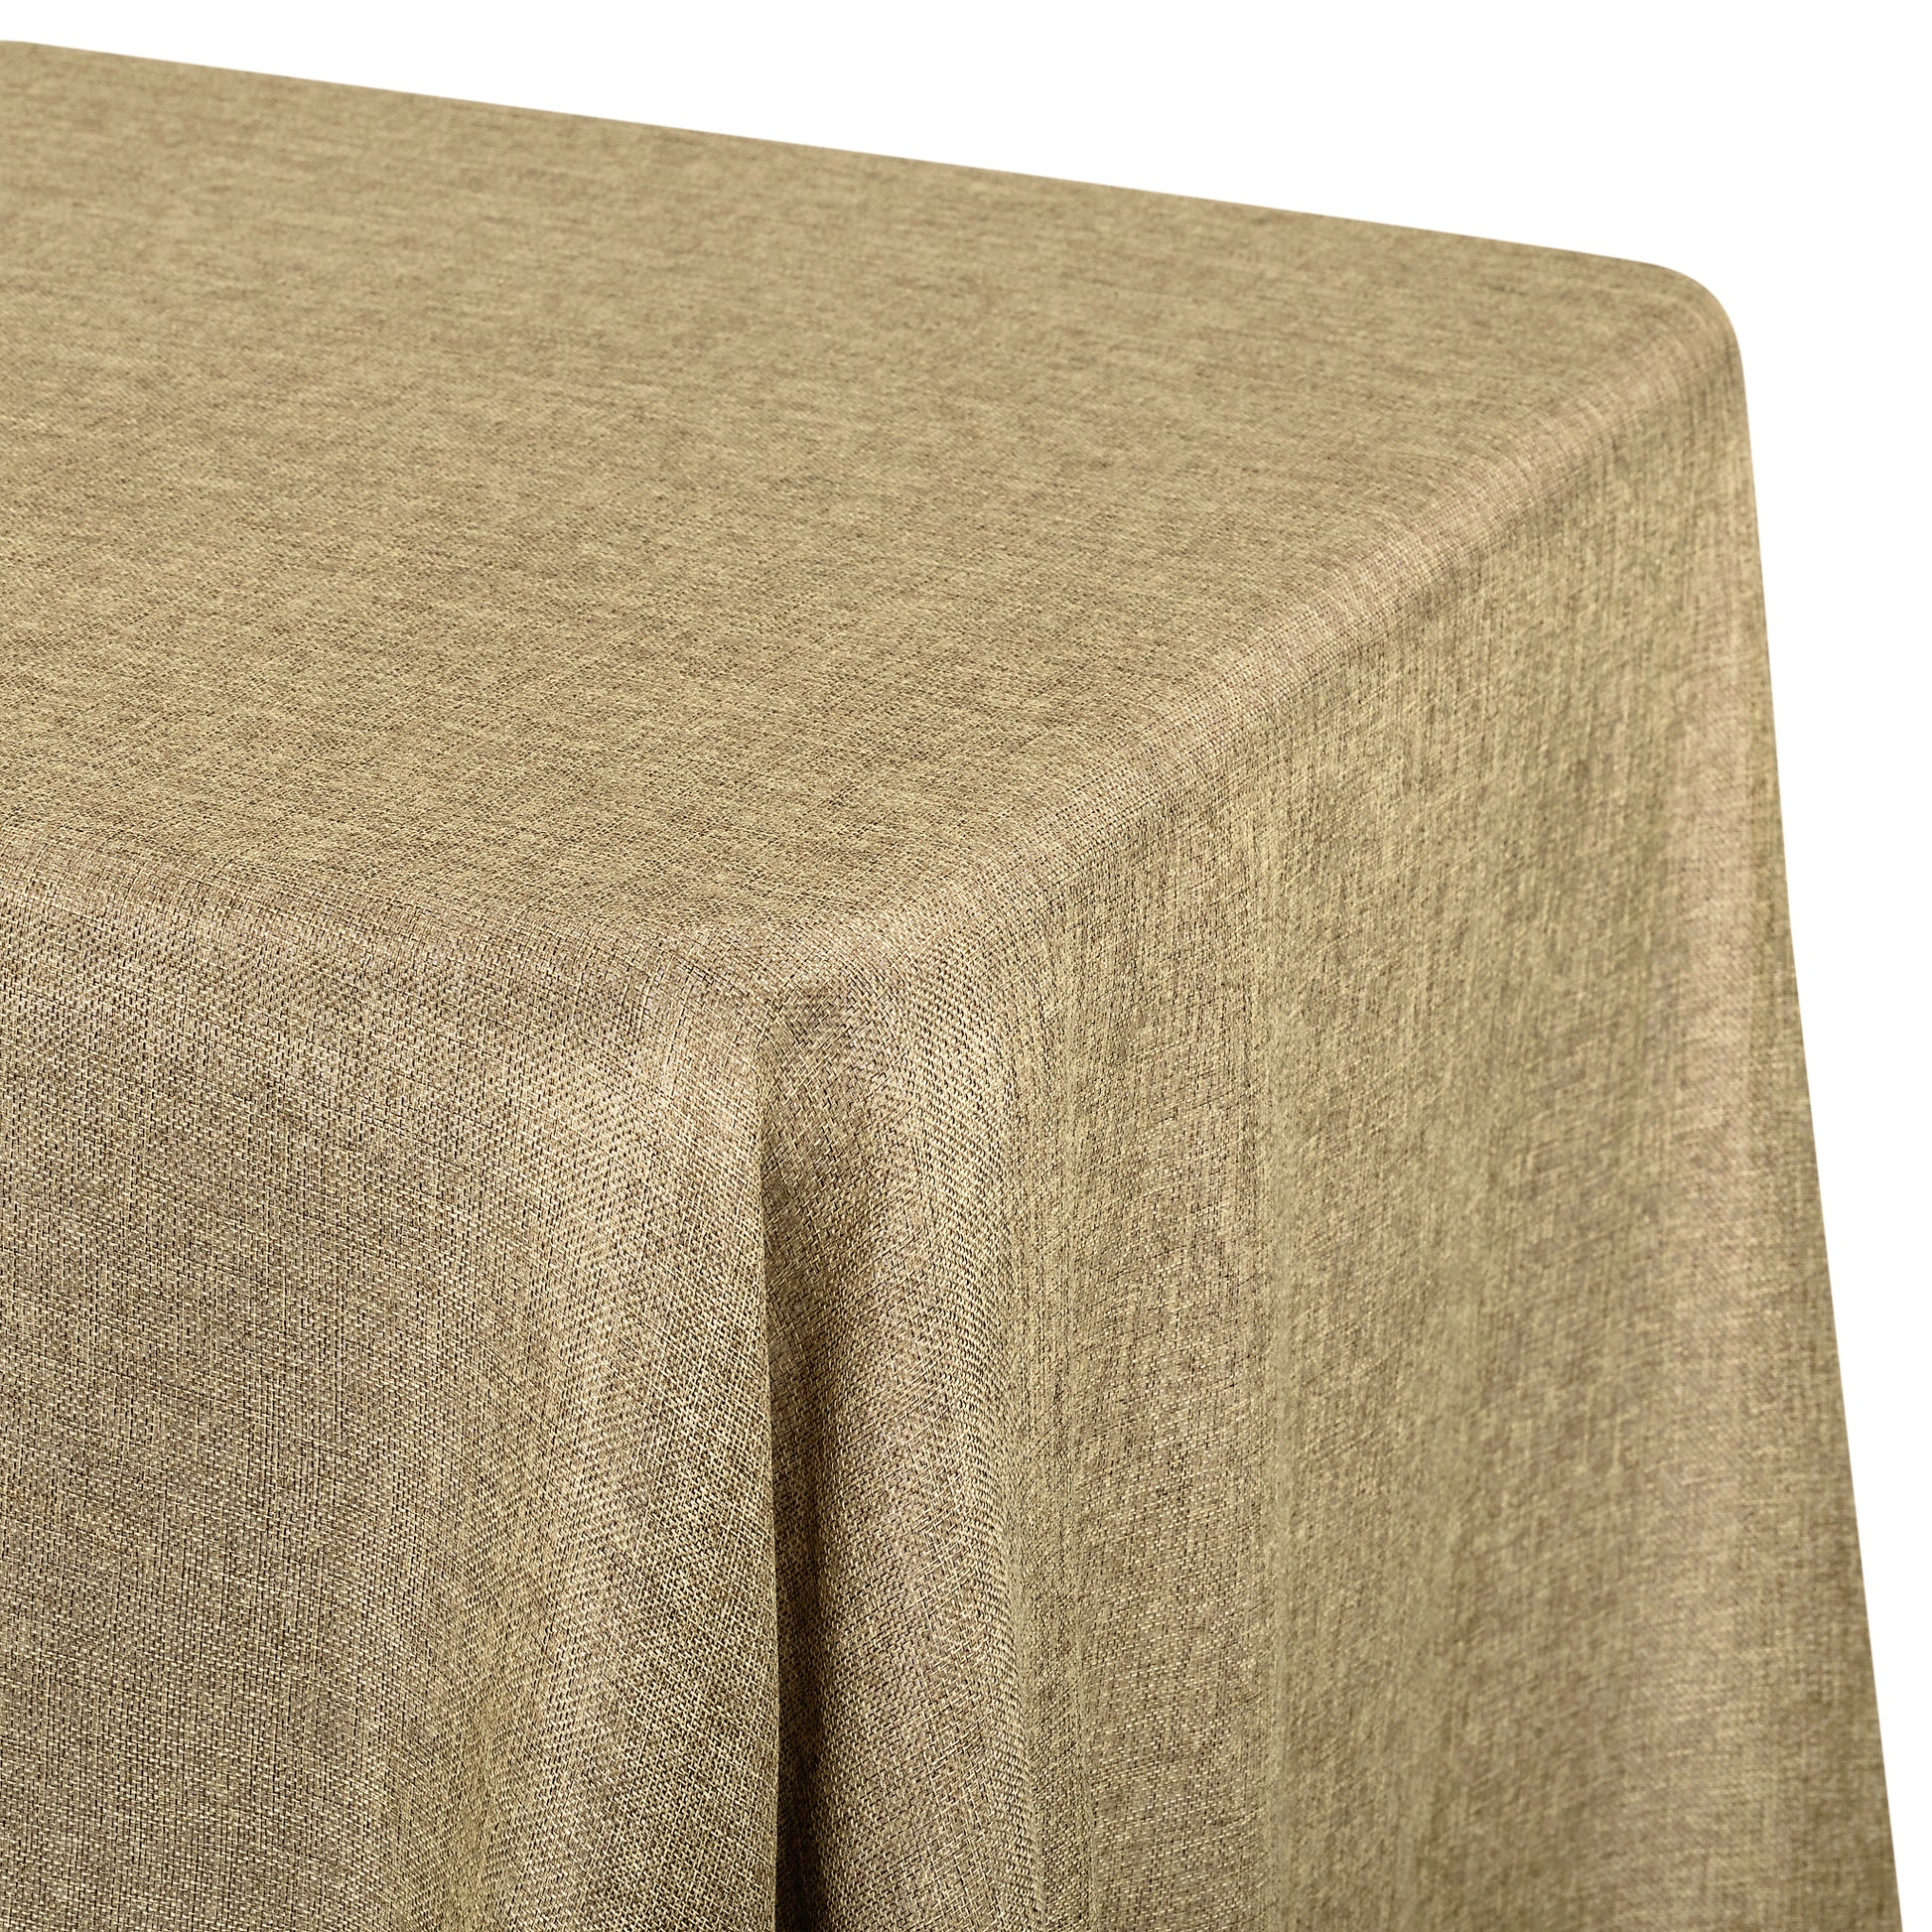 Faux Burlap Tablecloth 90"x132" Rectangular  - Natural Tan - CV Linens